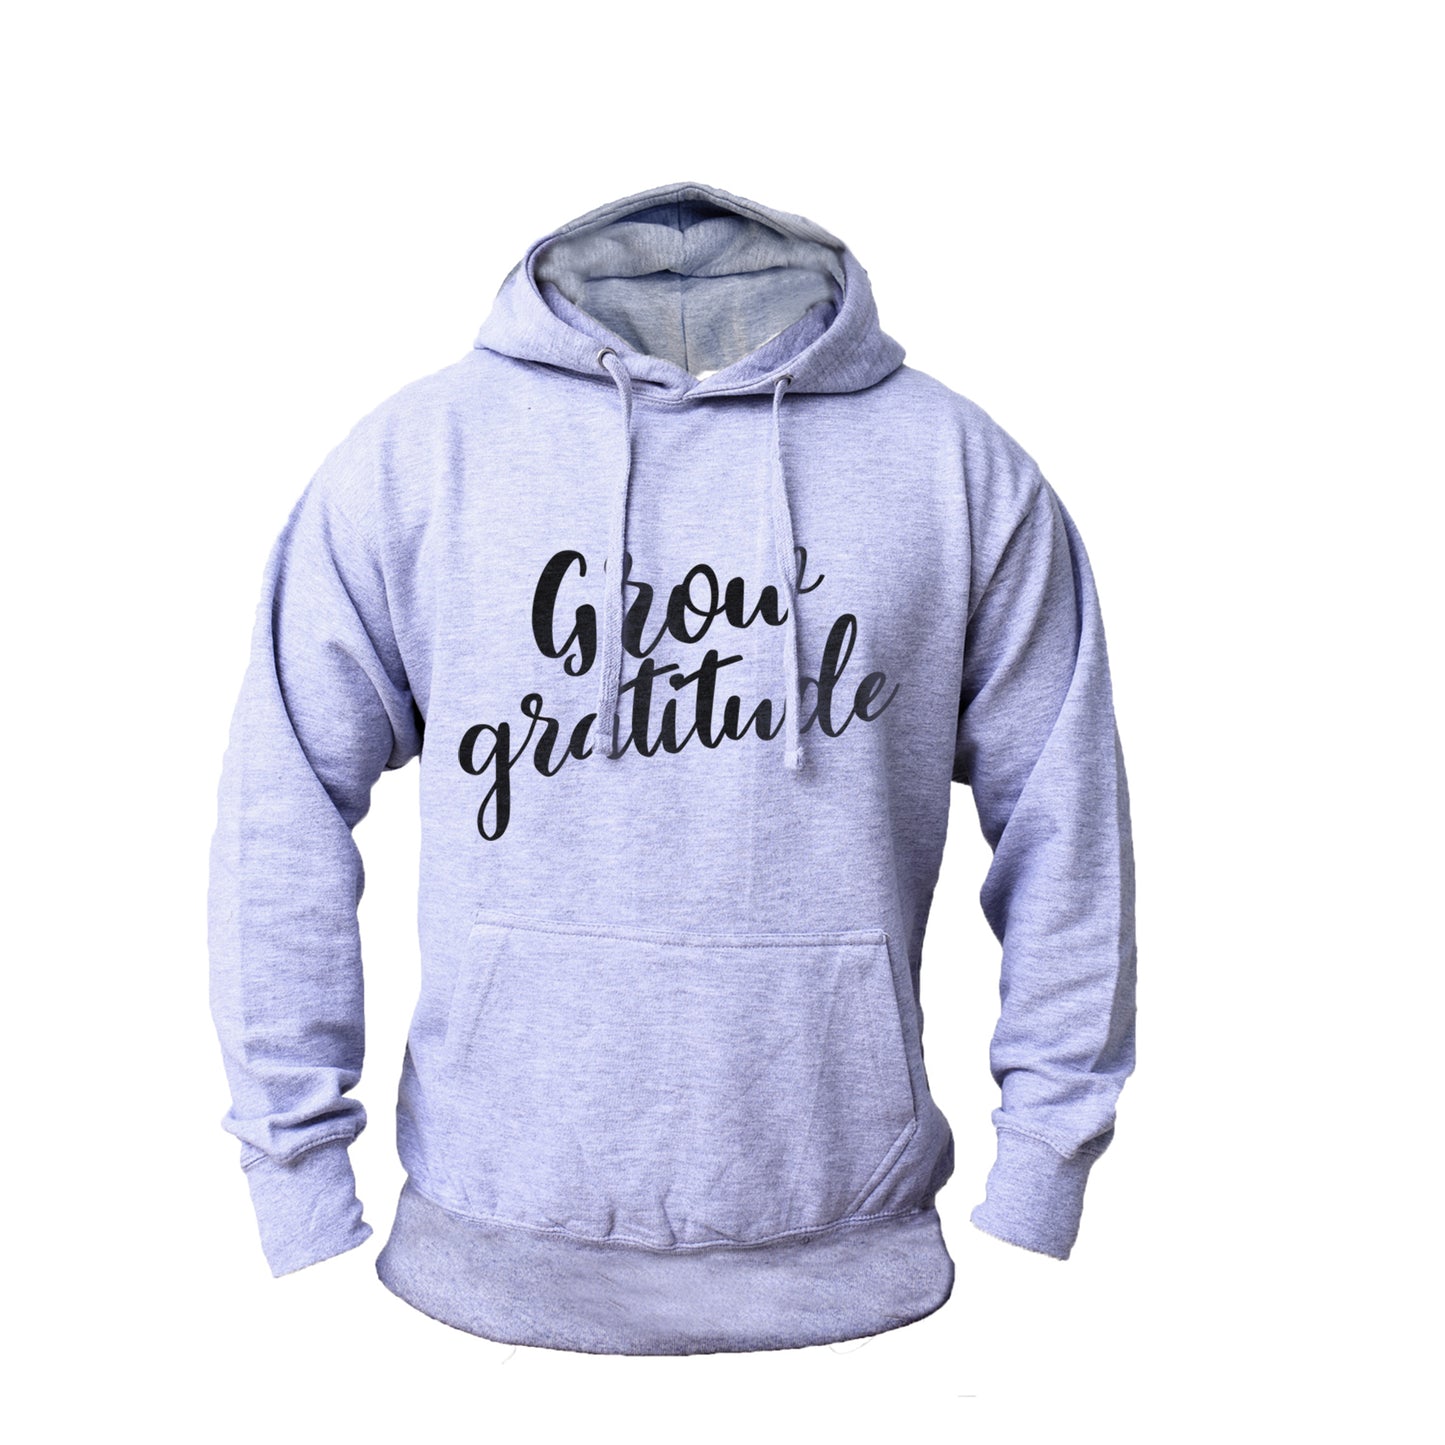 Men's 'Grow Gratitude' Fleece Pullover Long-sleeved Printed Hoodie